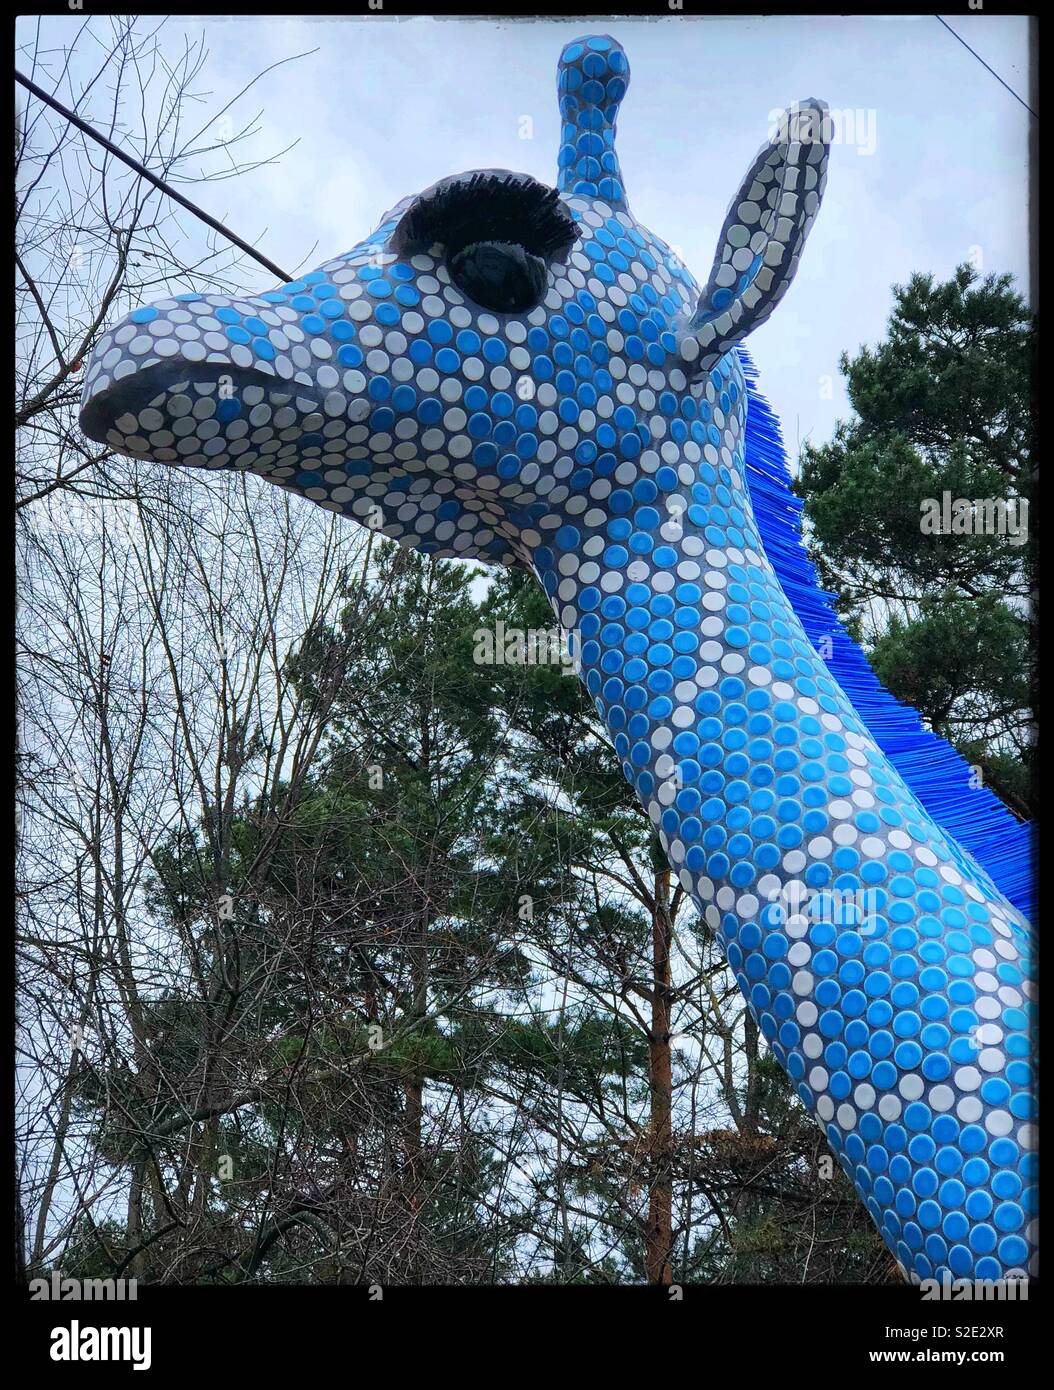 Jirafa mosaico azul Fotografía de stock - Alamy